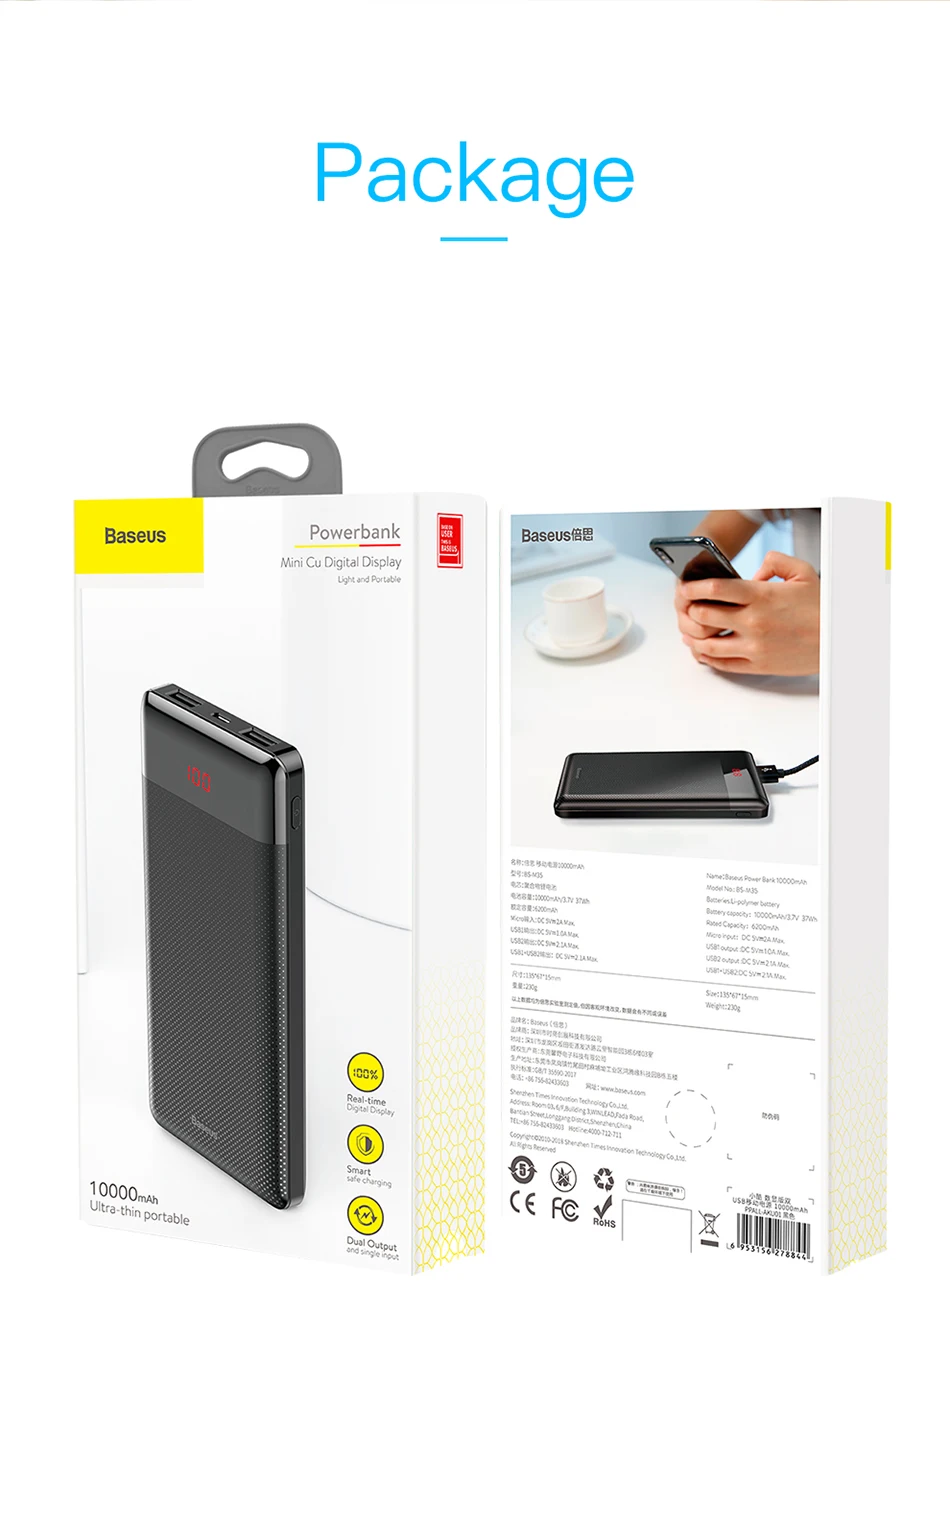 Baseus тонкий внешний аккумулятор 10000 мАч 10000 USB lcd Внешний аккумулятор портативное Внешнее зарядное устройство для мобильного телефона Xiaomi Poverbank